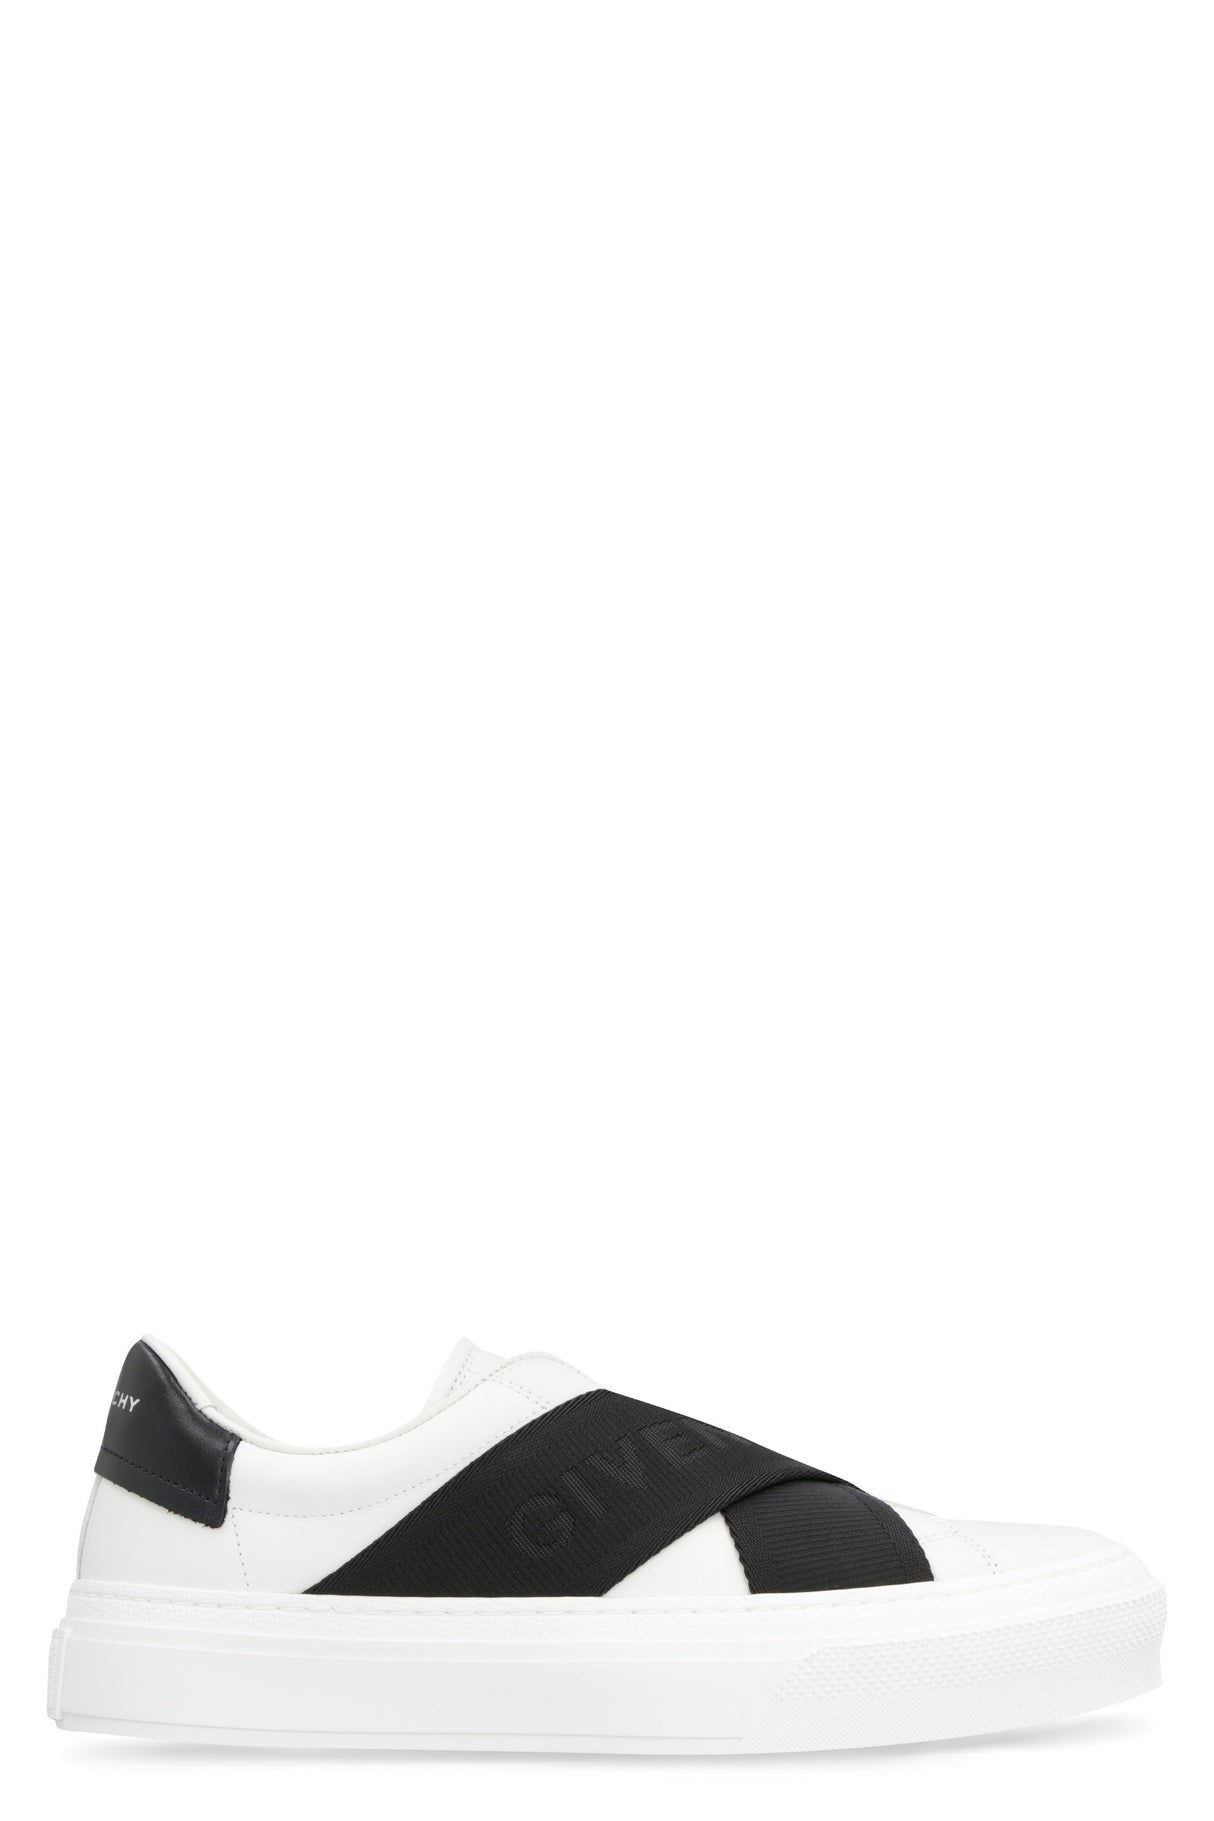 白色女士2024 FW23 Givenchy 城市运动皮革运动鞋